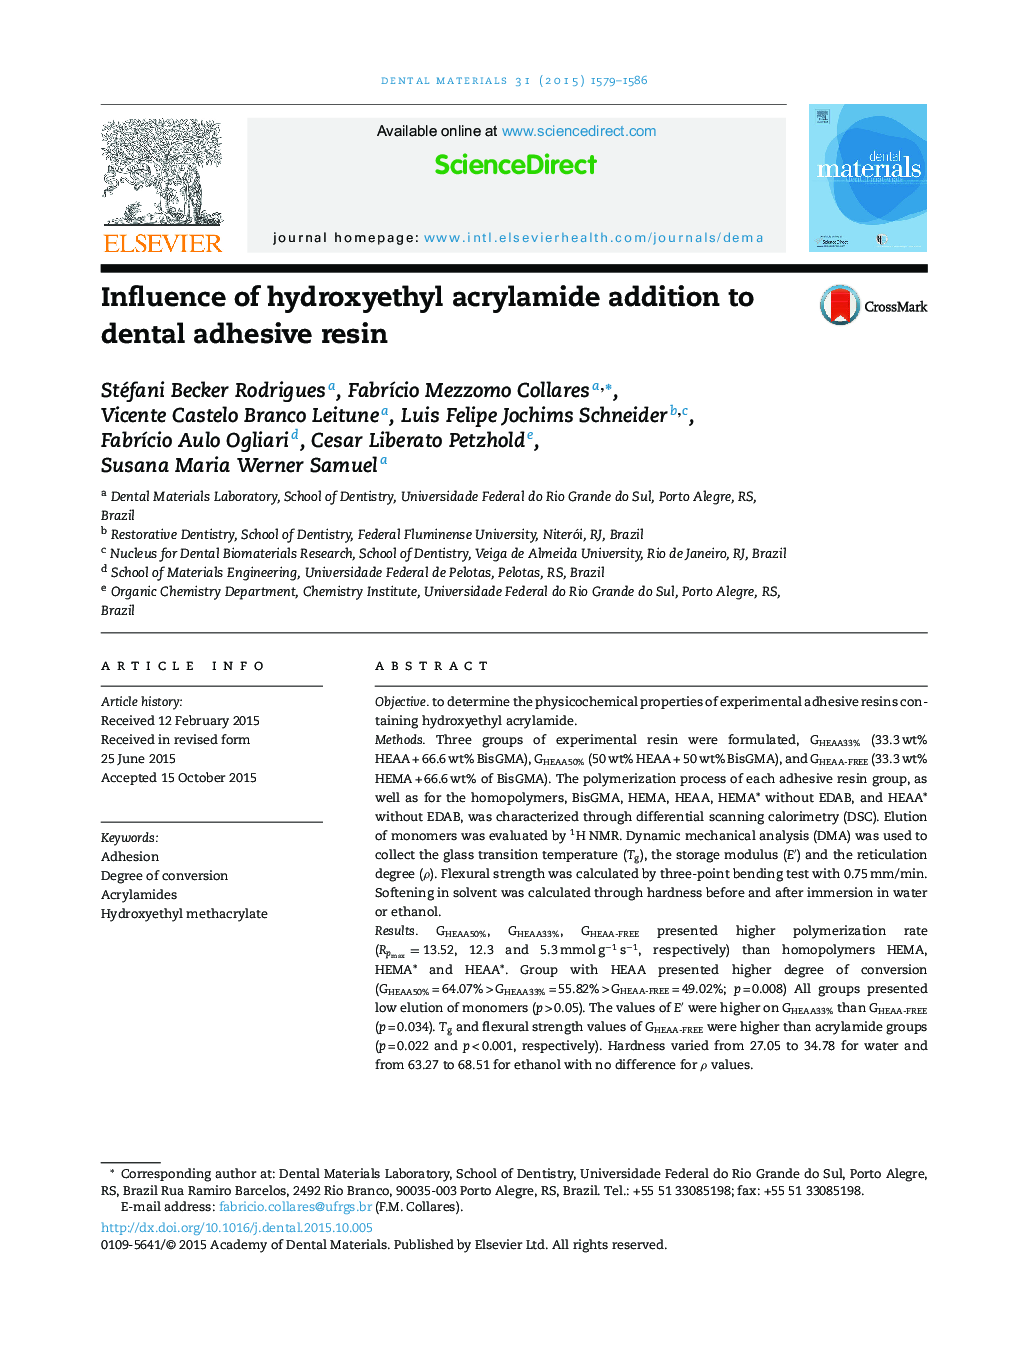 Influence of hydroxyethyl acrylamide addition to dental adhesive resin